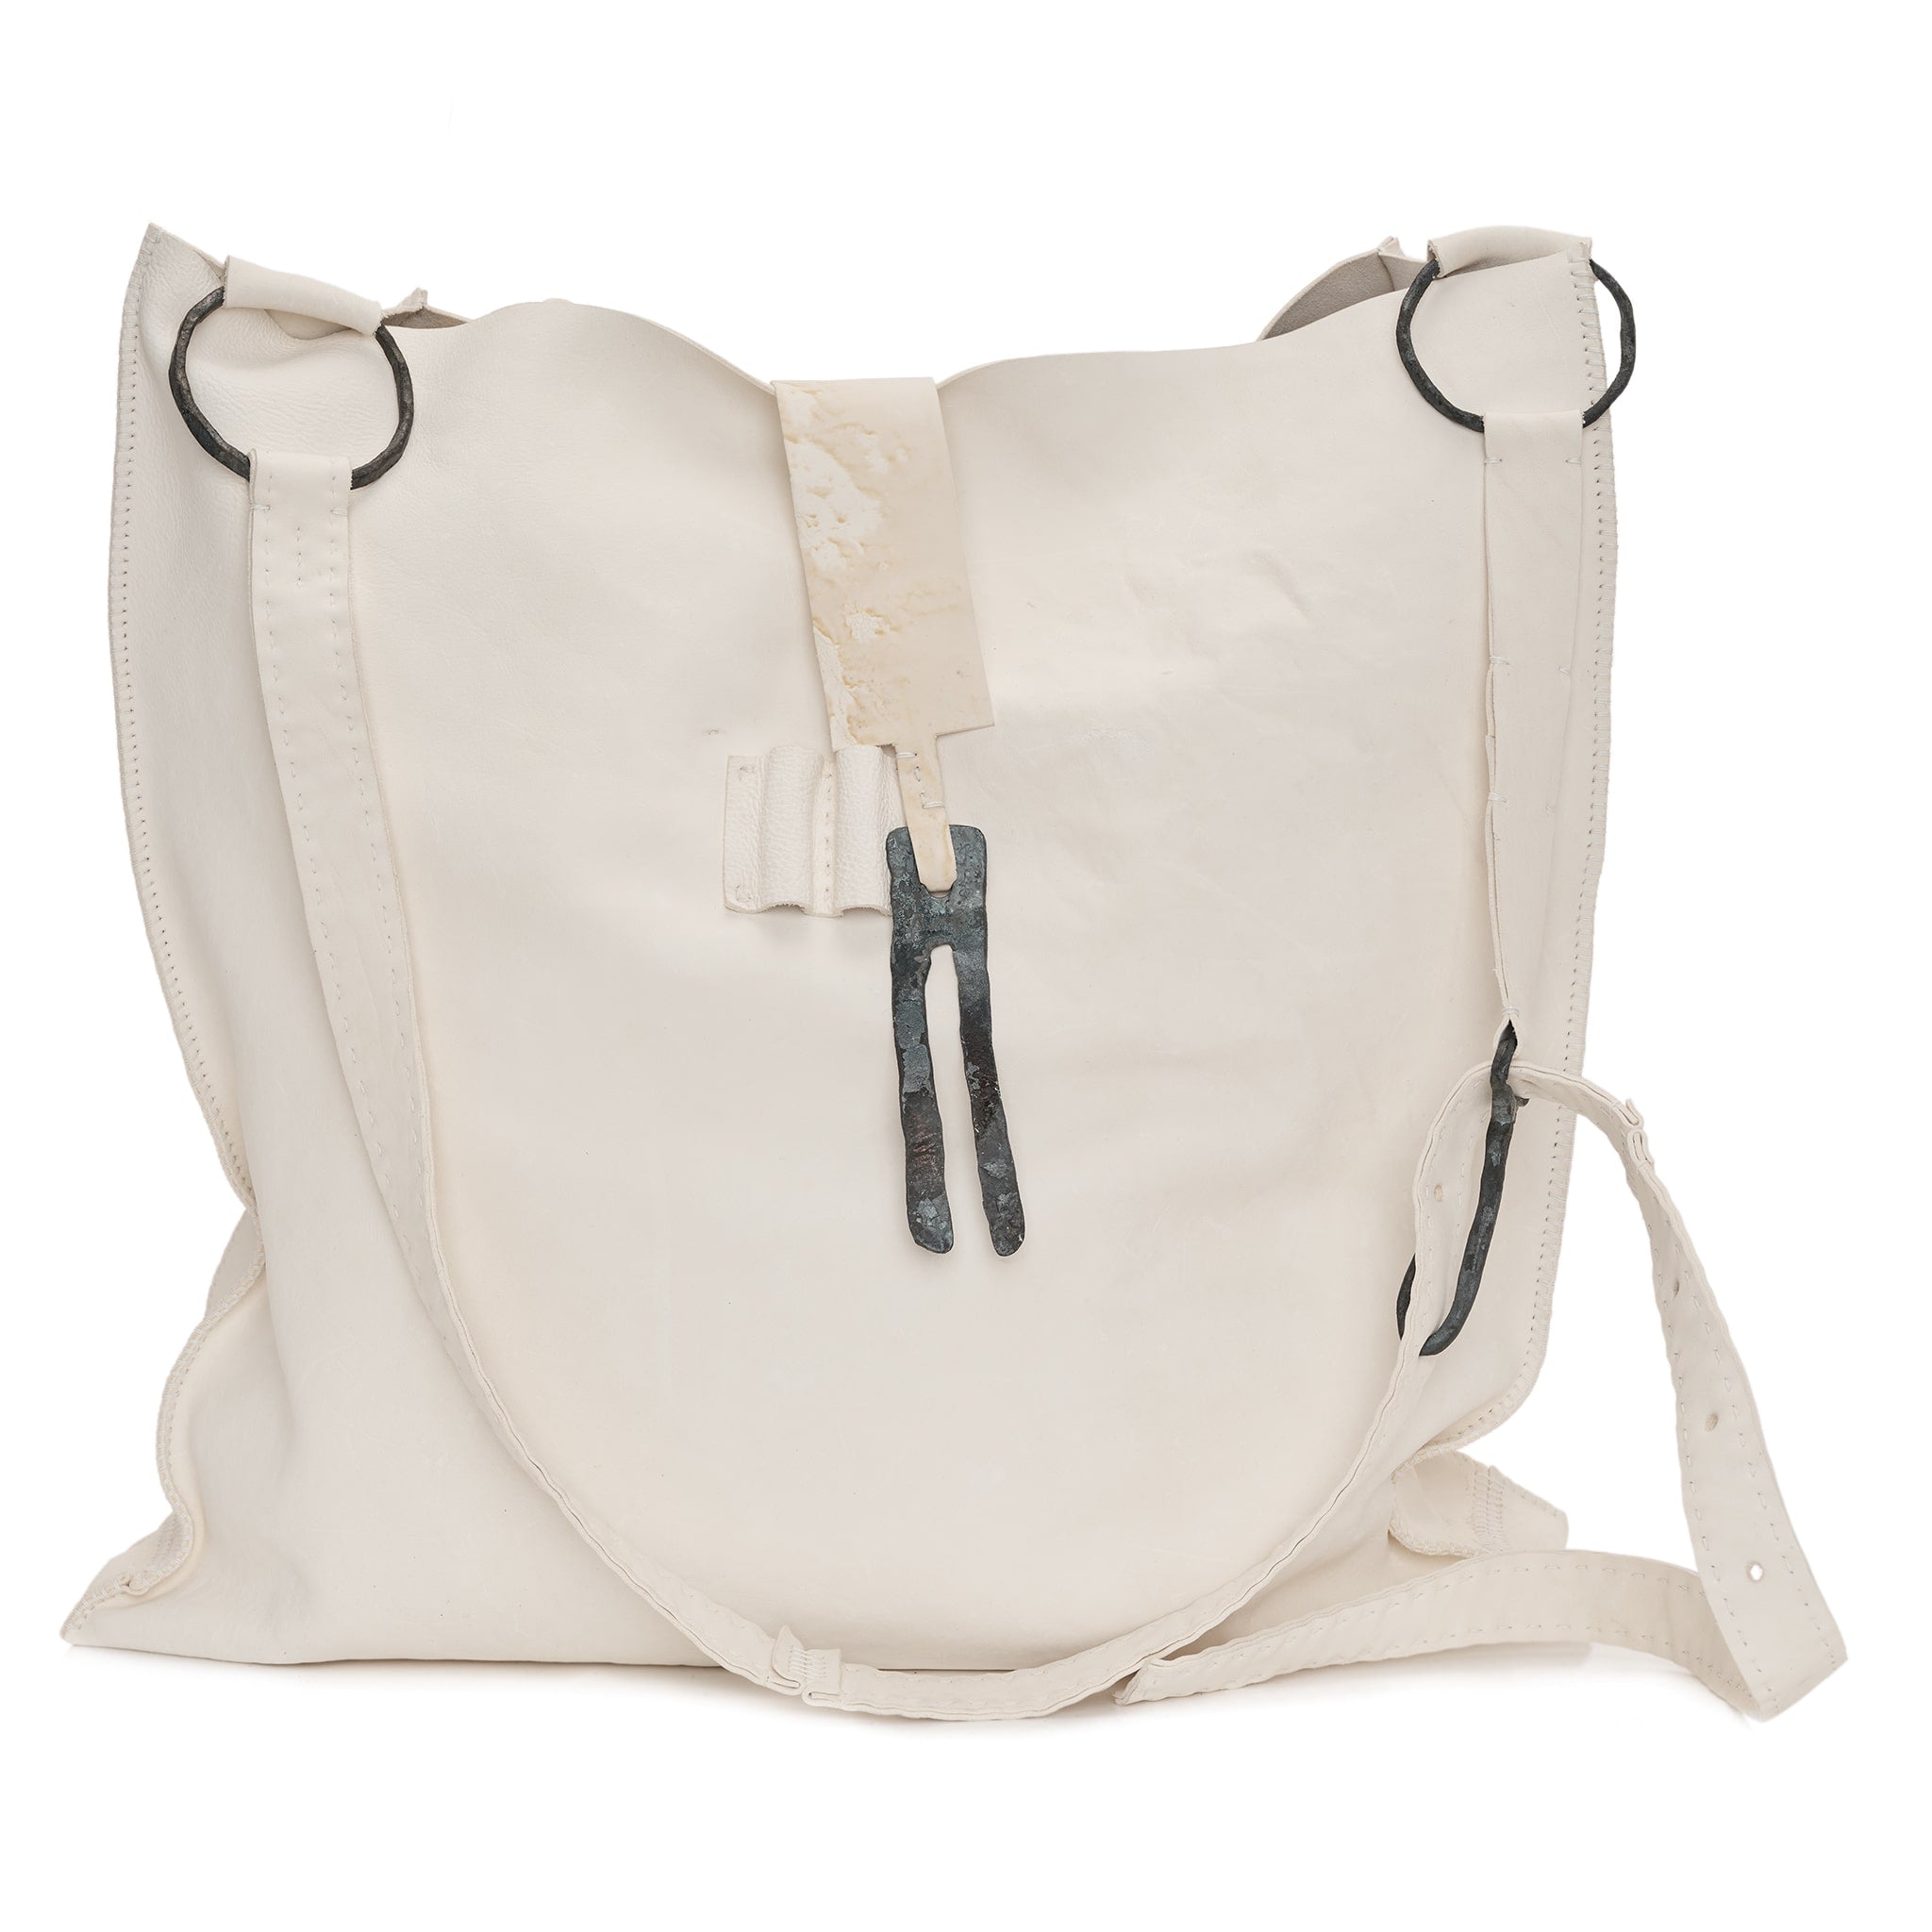 avant garde culatta leather shoulder bag from atelier skn